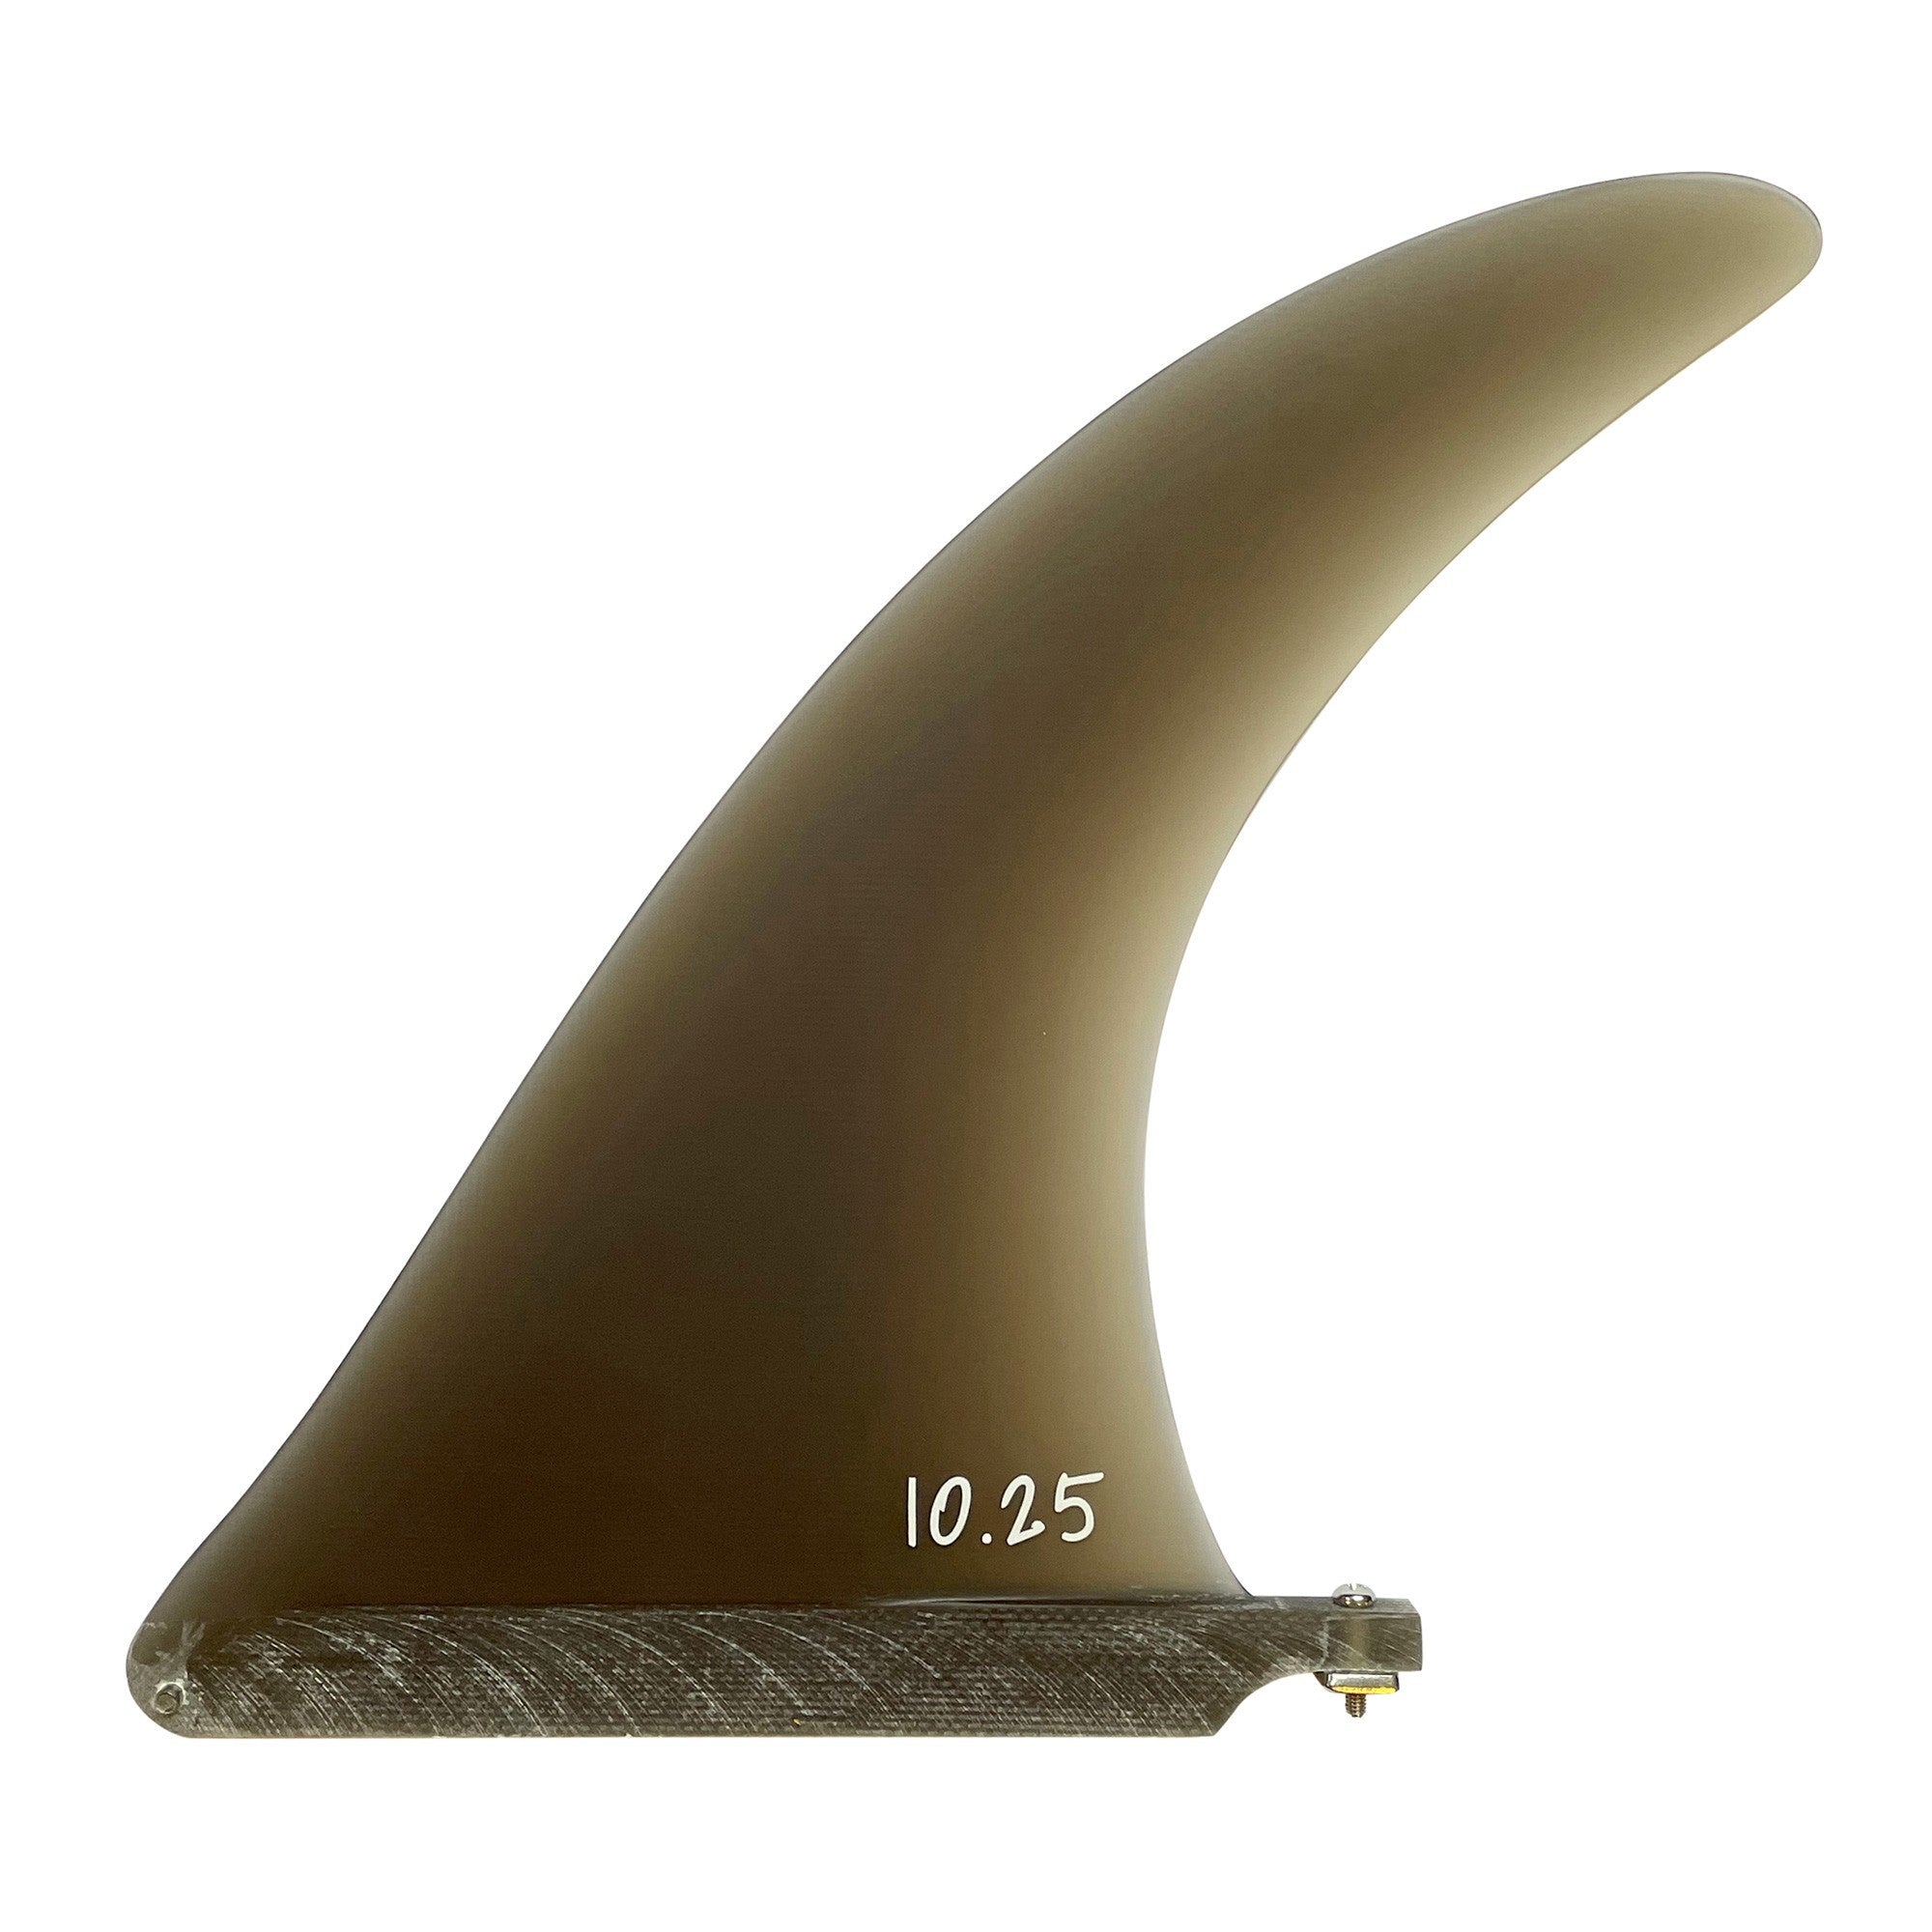 SURF SYSTEM - Dolphin Fiberglass Single Fin (Us Box) - 7.5"- Smoke